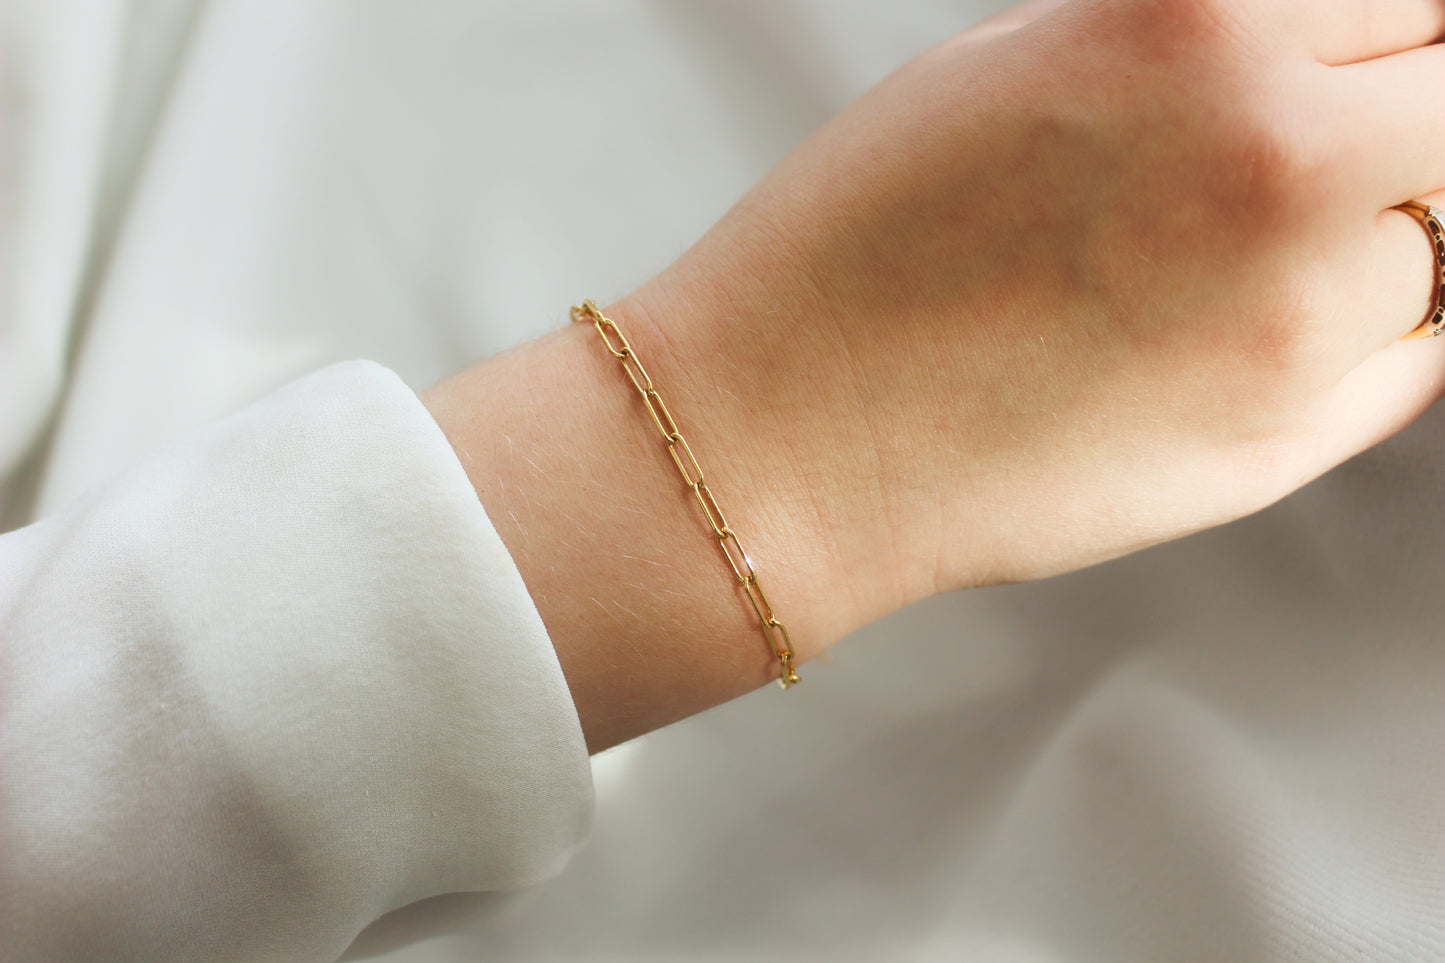 14k gold fill Paperclip Bracelet ∙ 3x8.8mm ∙ Rectangle Link Chain ∙ Sturdy Minimalist Bracelet For Her ∙ Chunky Bracelet ∙ Trendy Jewelry